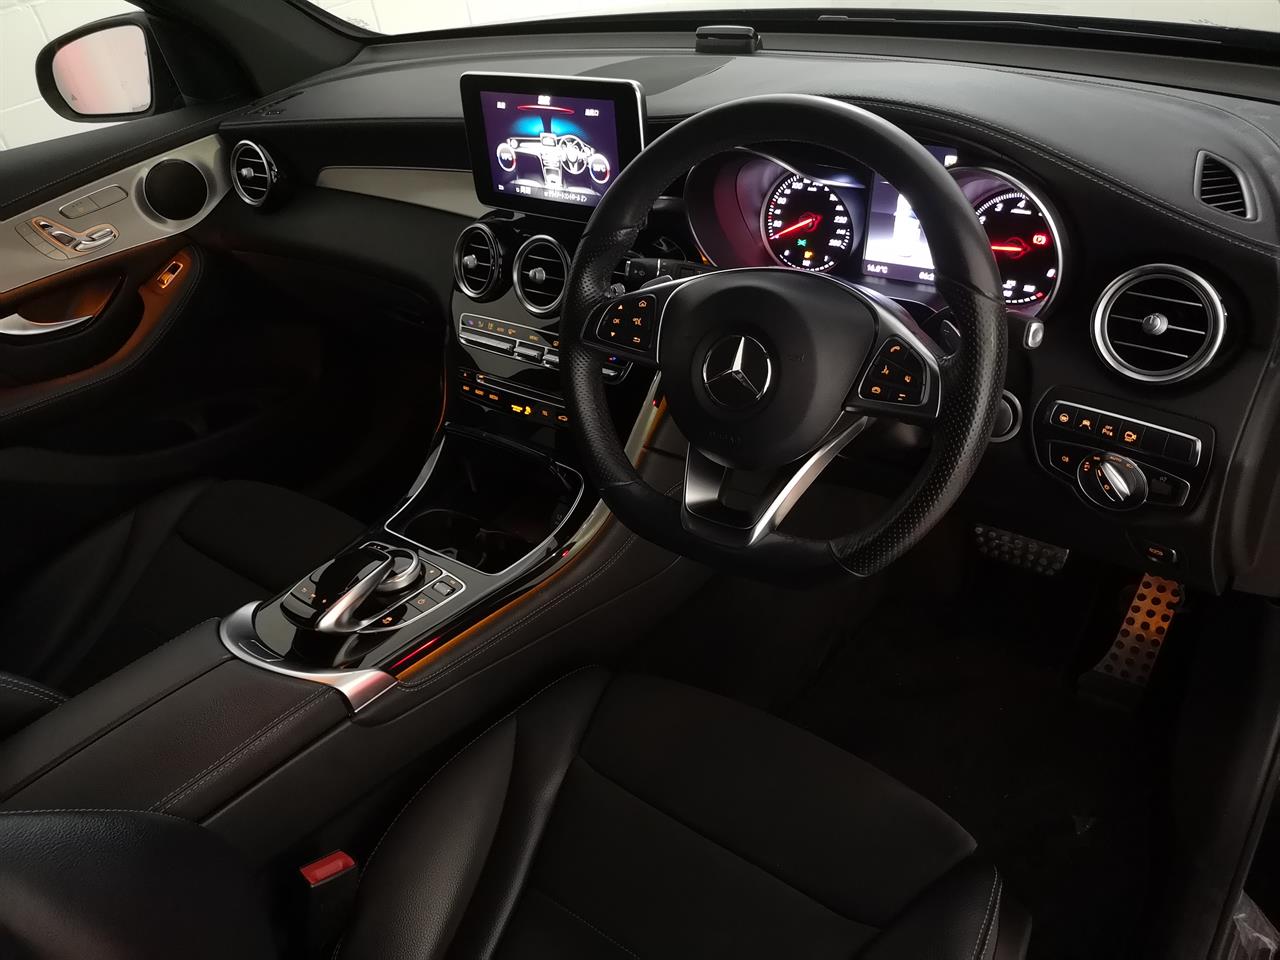 2018 Mercedes-Benz GLC 200